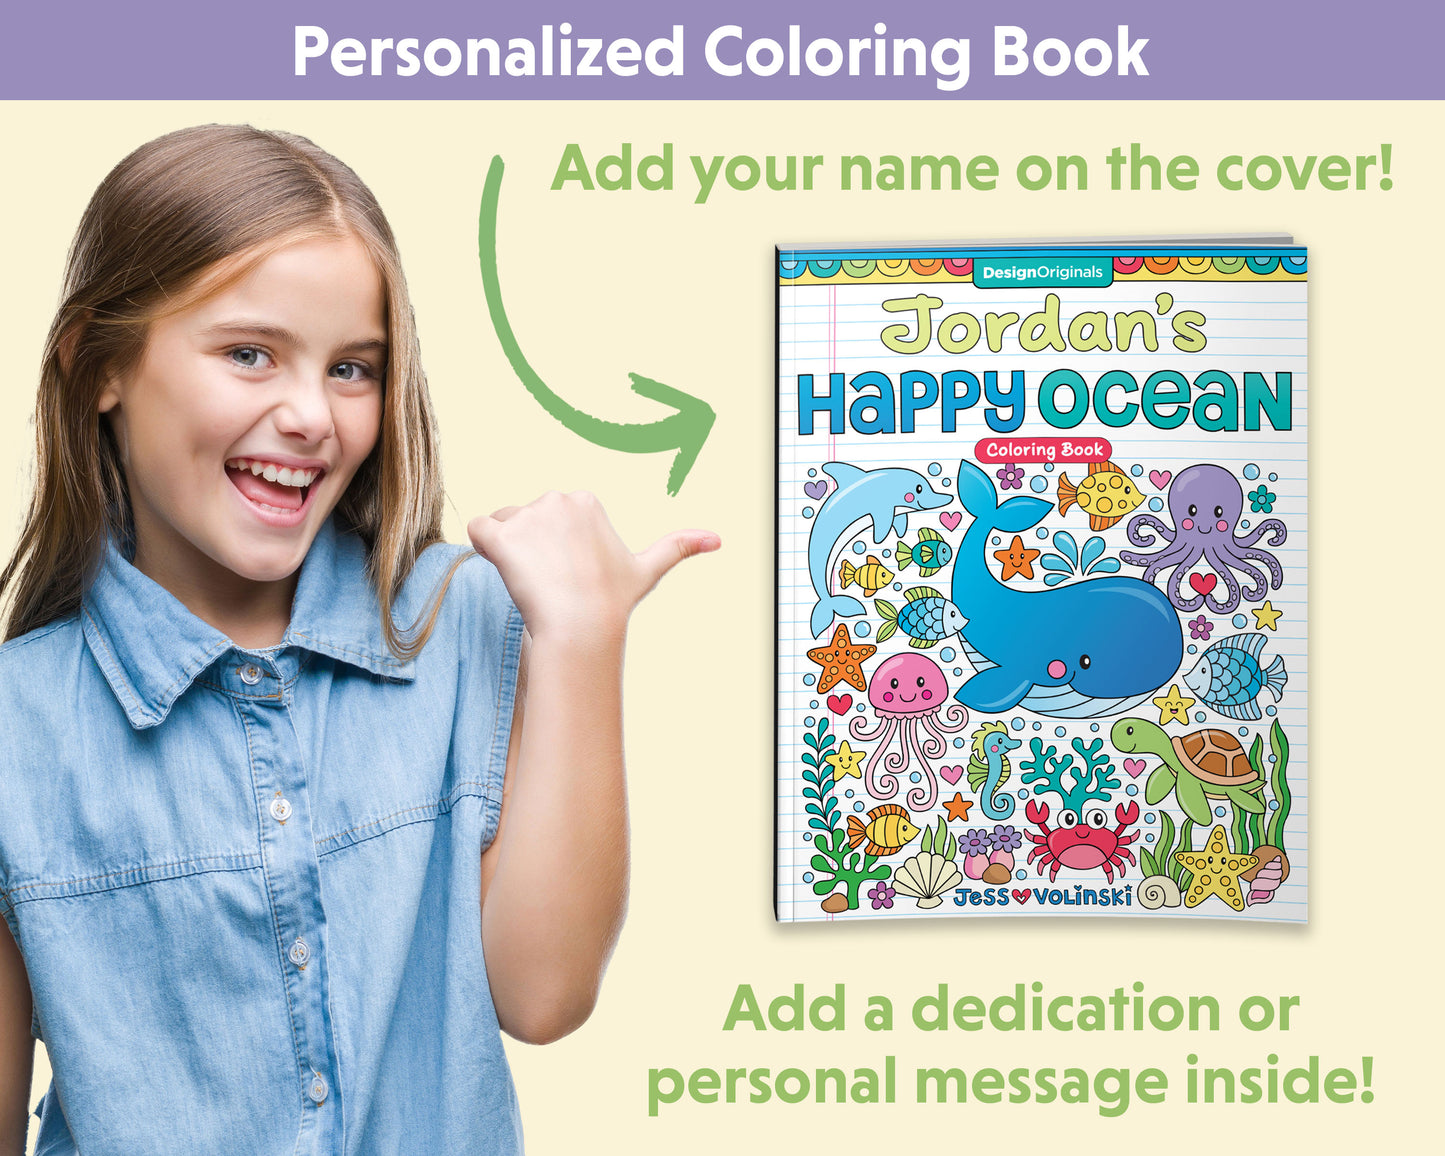 Notebook Doodles Happy Ocean Coloring Book Customized